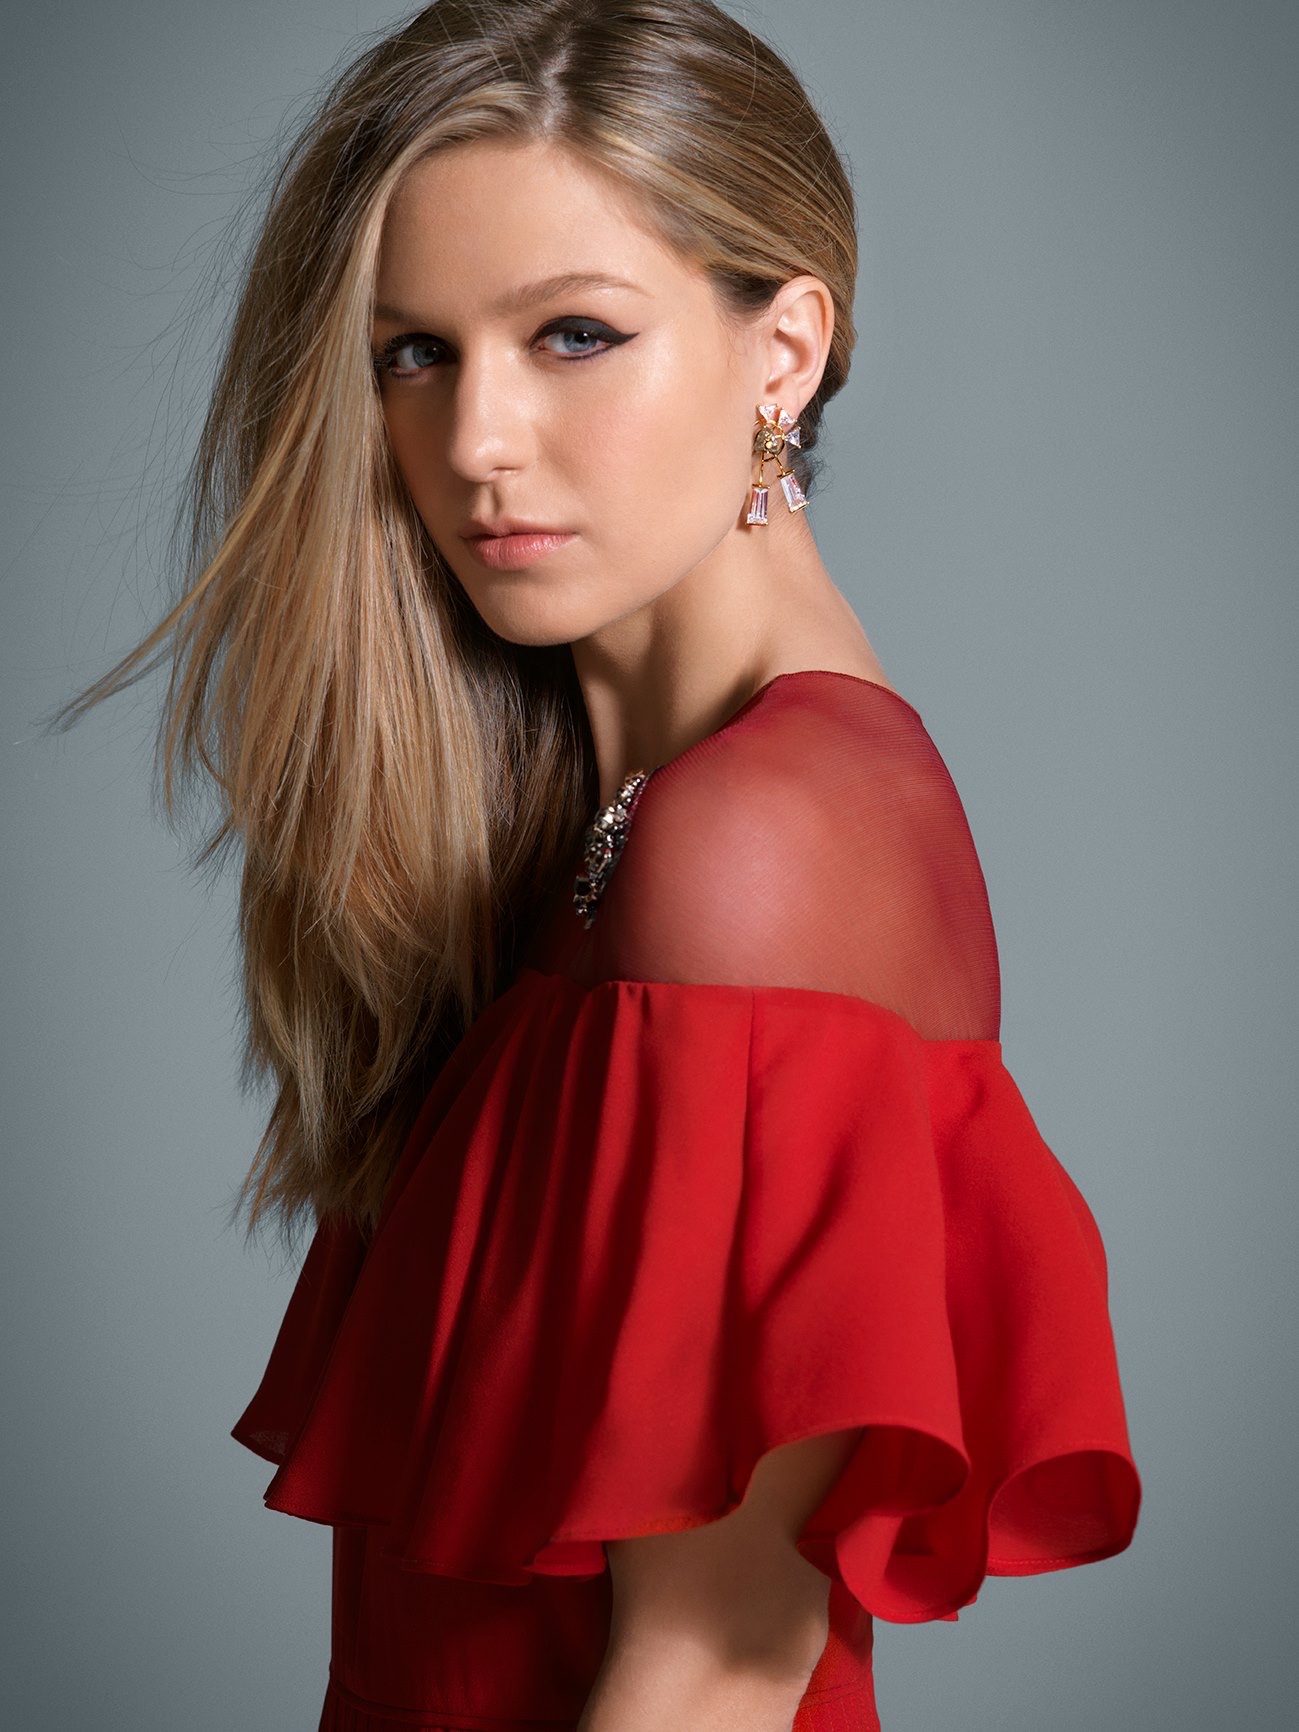 Melissa Benoist Actress Blue Eyes Women Straight Hair Long Hair Looking Over Shoulder Red Dress Blon 1299x1732